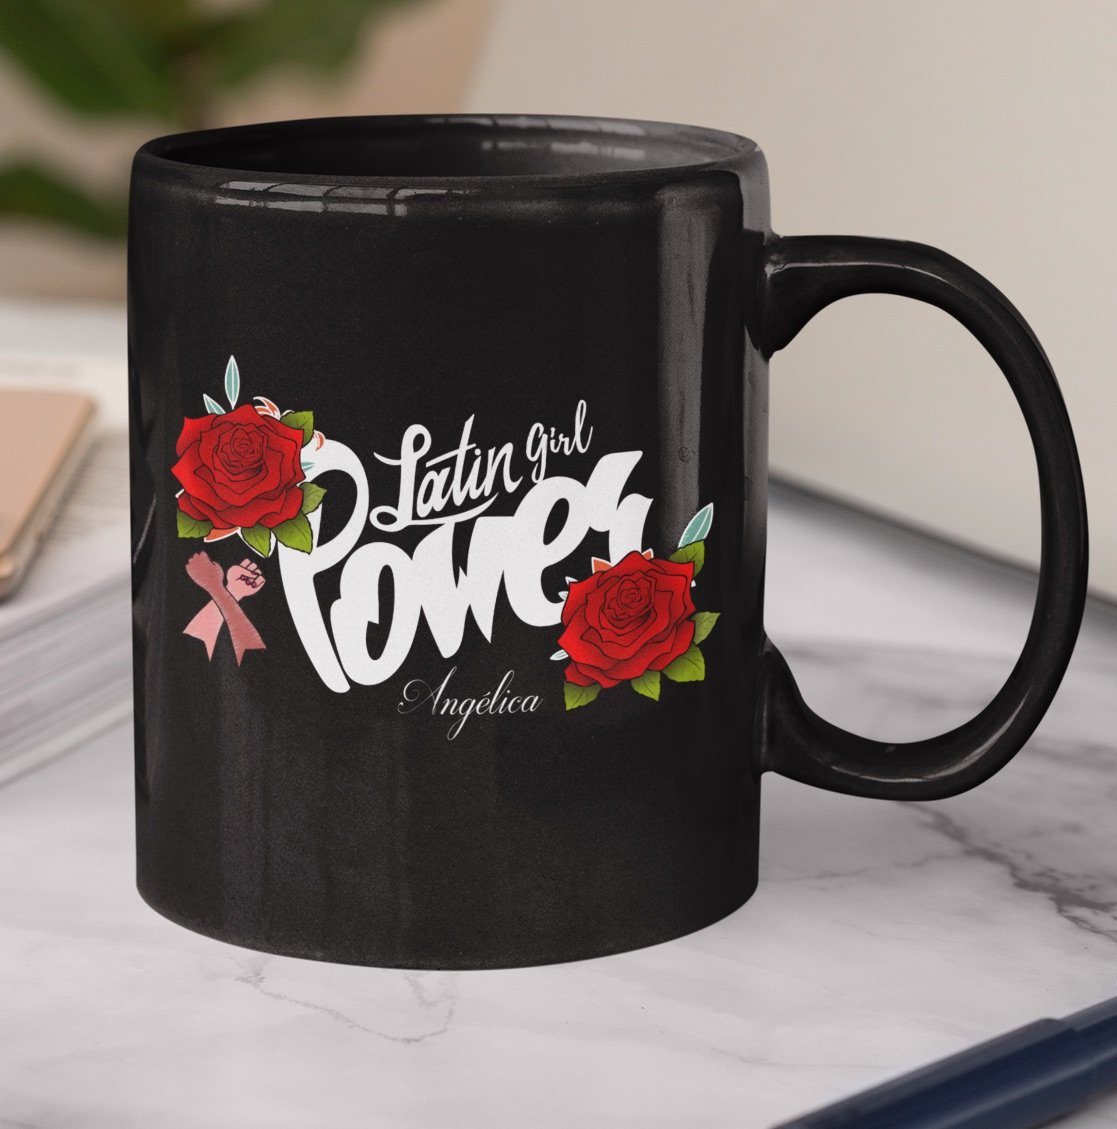 Latin Girl Power Taza Personalizada Coffee Mug Regalos.Gifts 11oz Mug Black 